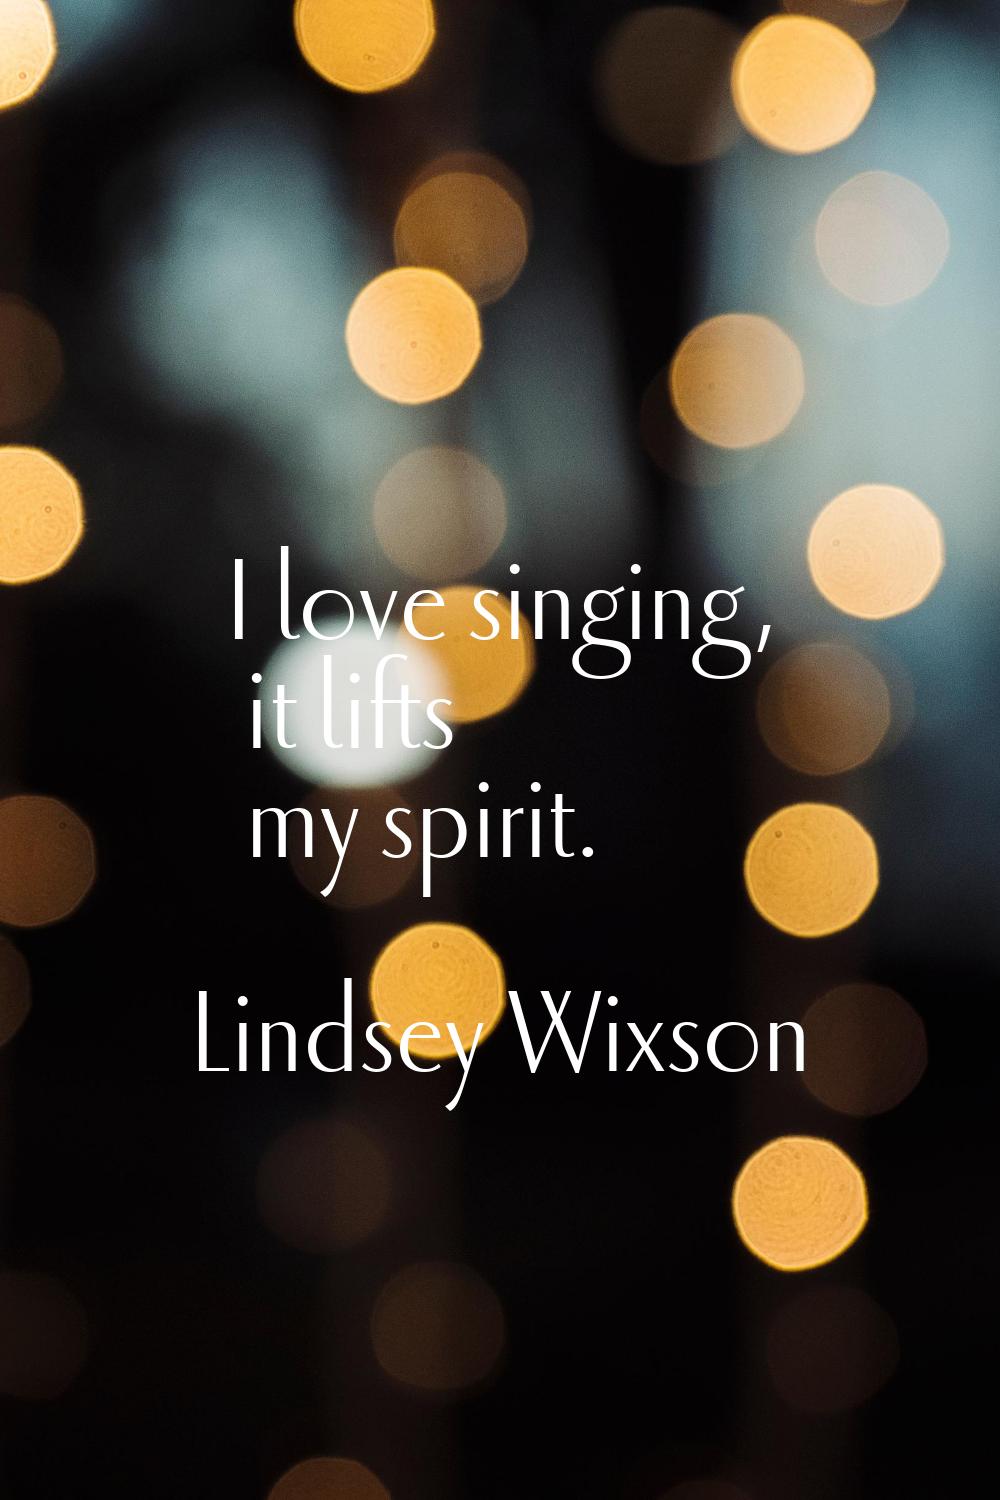 I love singing, it lifts my spirit.